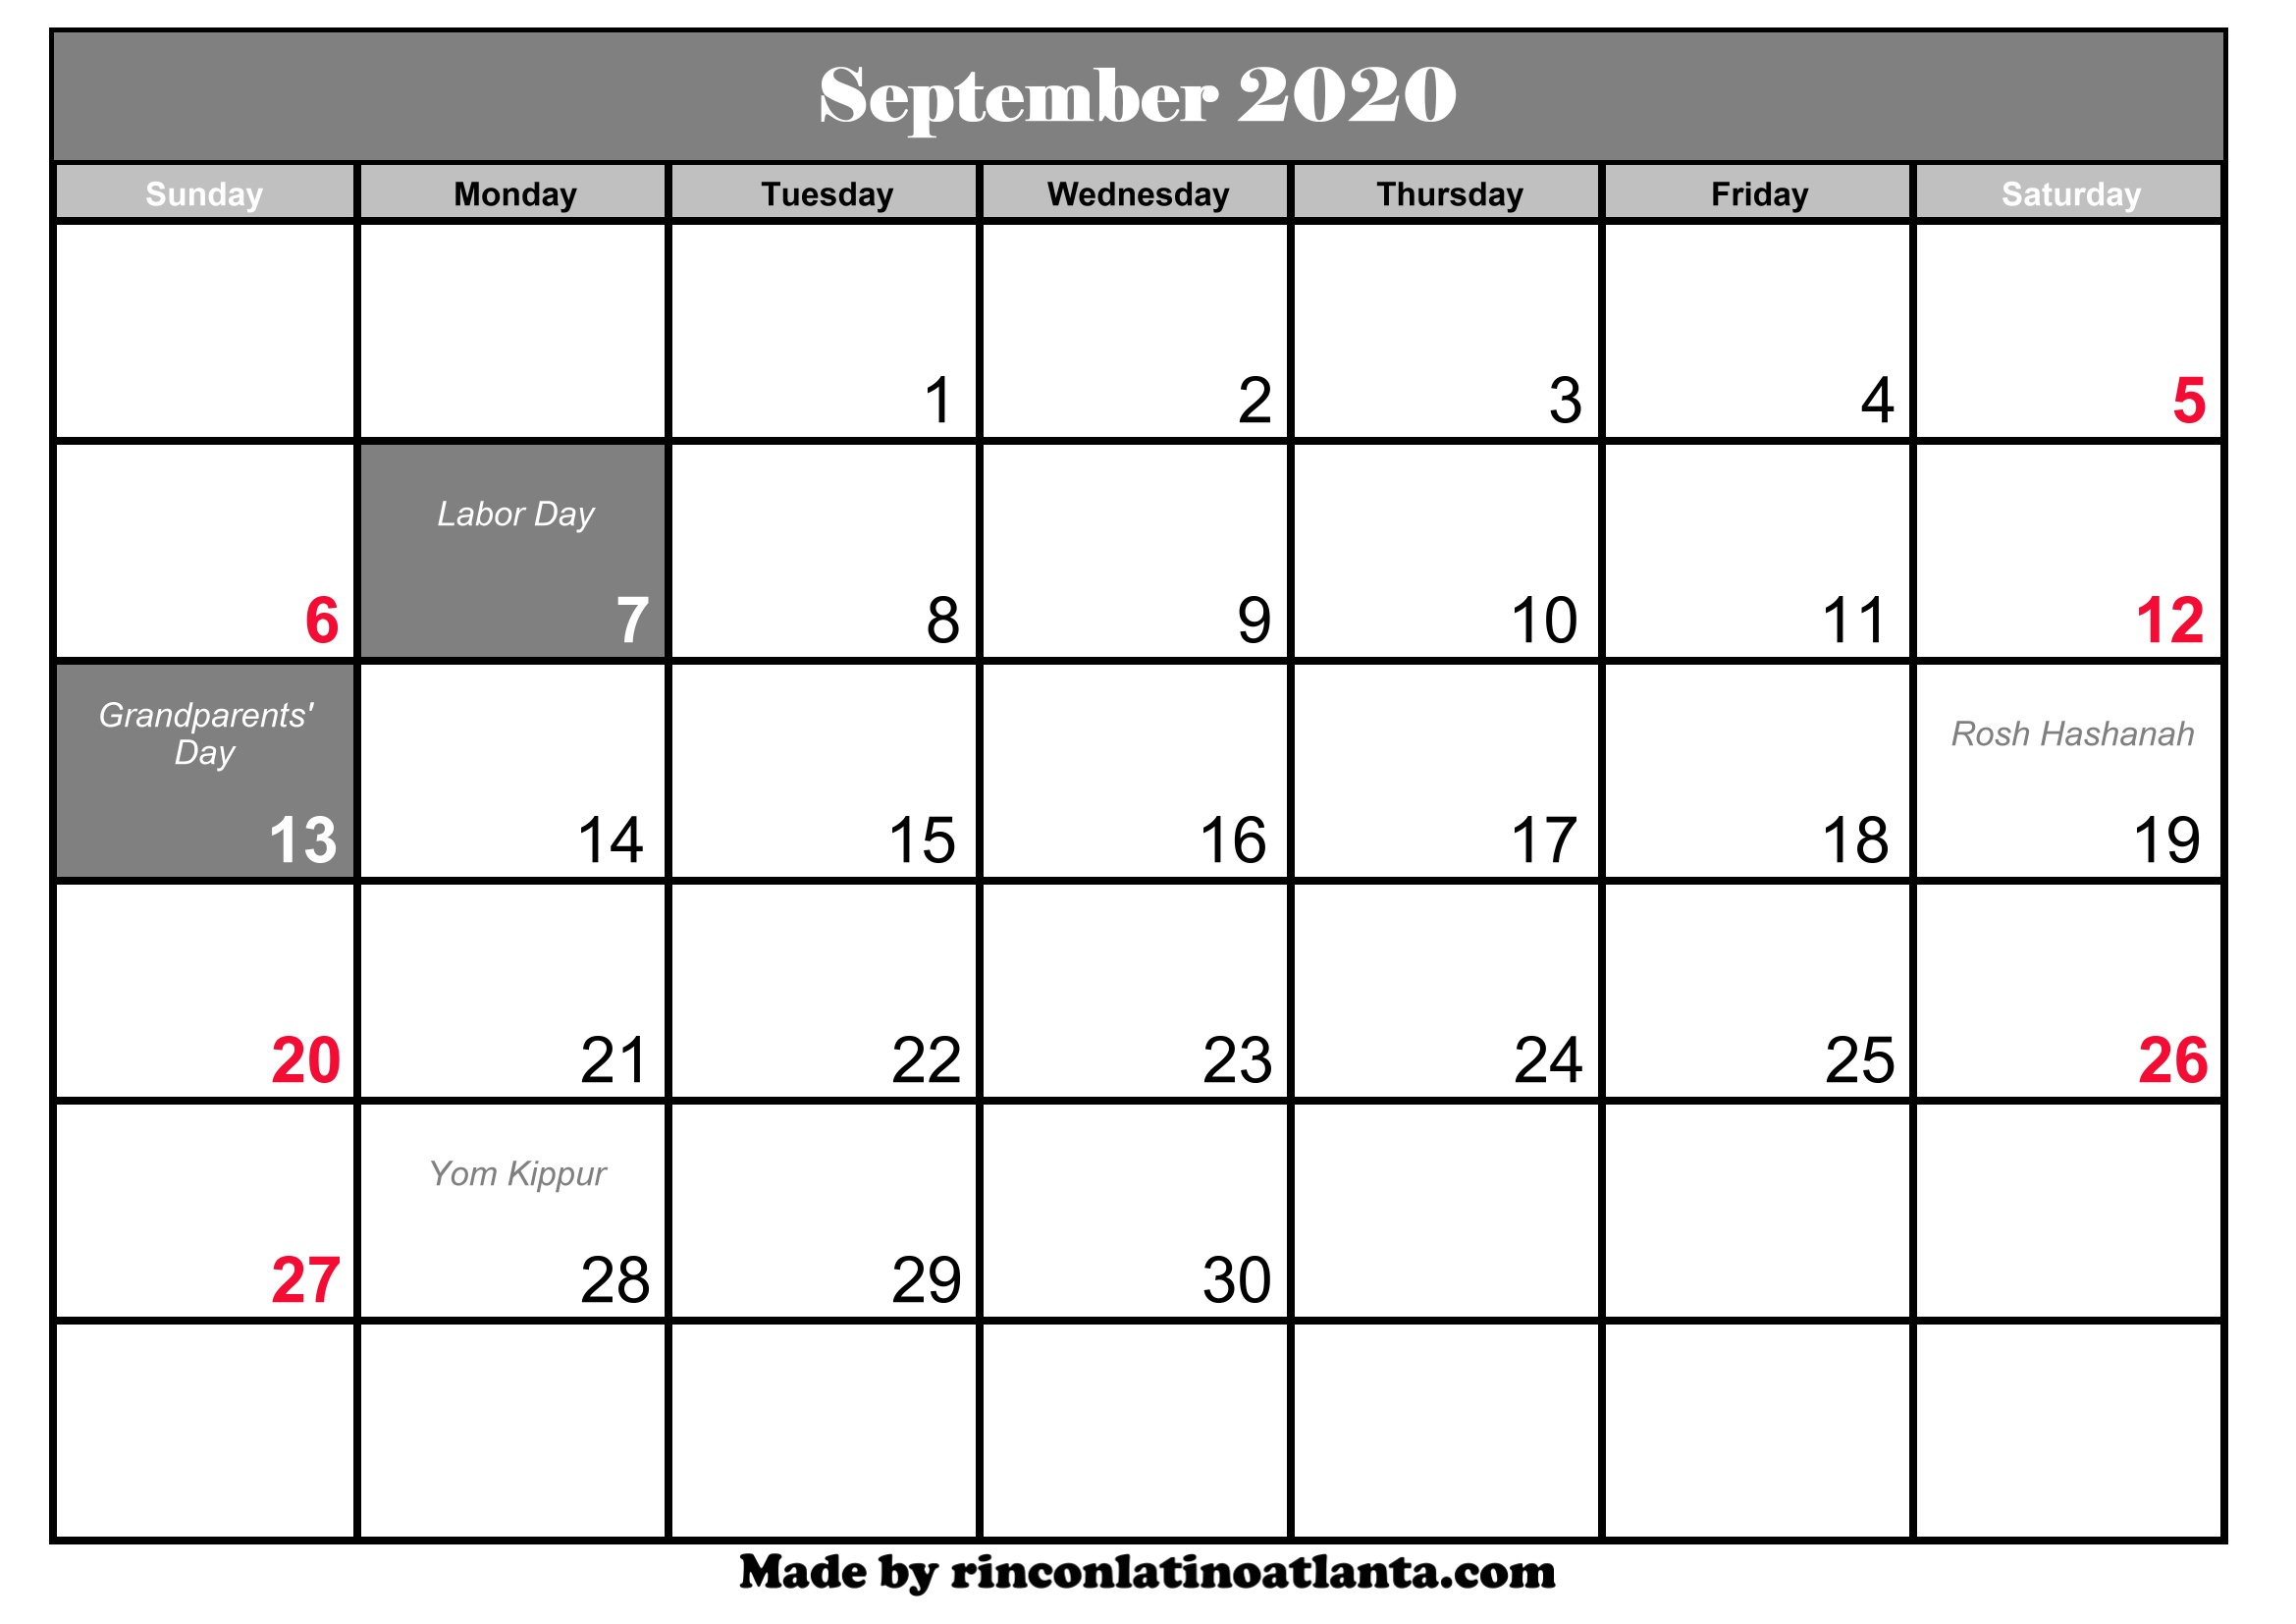 September 2020 Calendar With Holidays - Togo.wpart.co